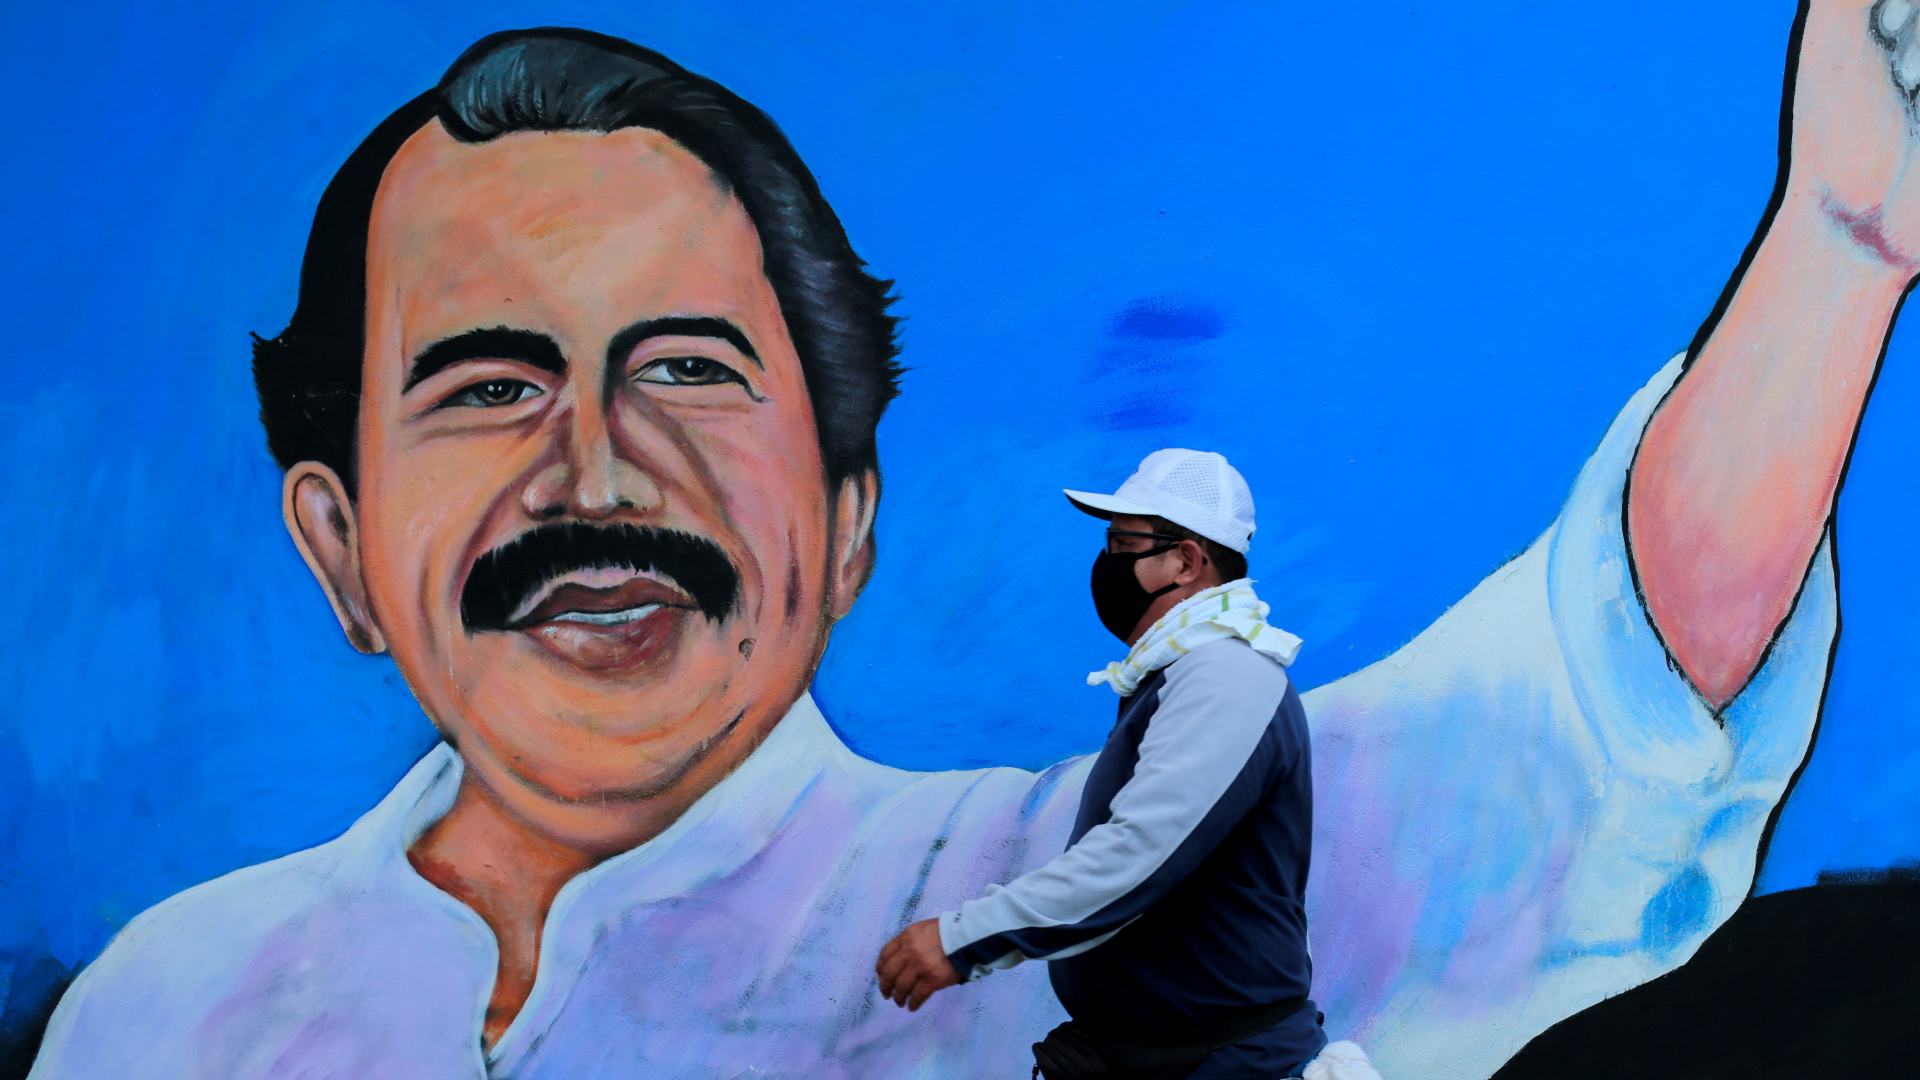 Wandgemälde von Präsident Ortega in Nicaraguas Hauptstadt Managua | REUTERS